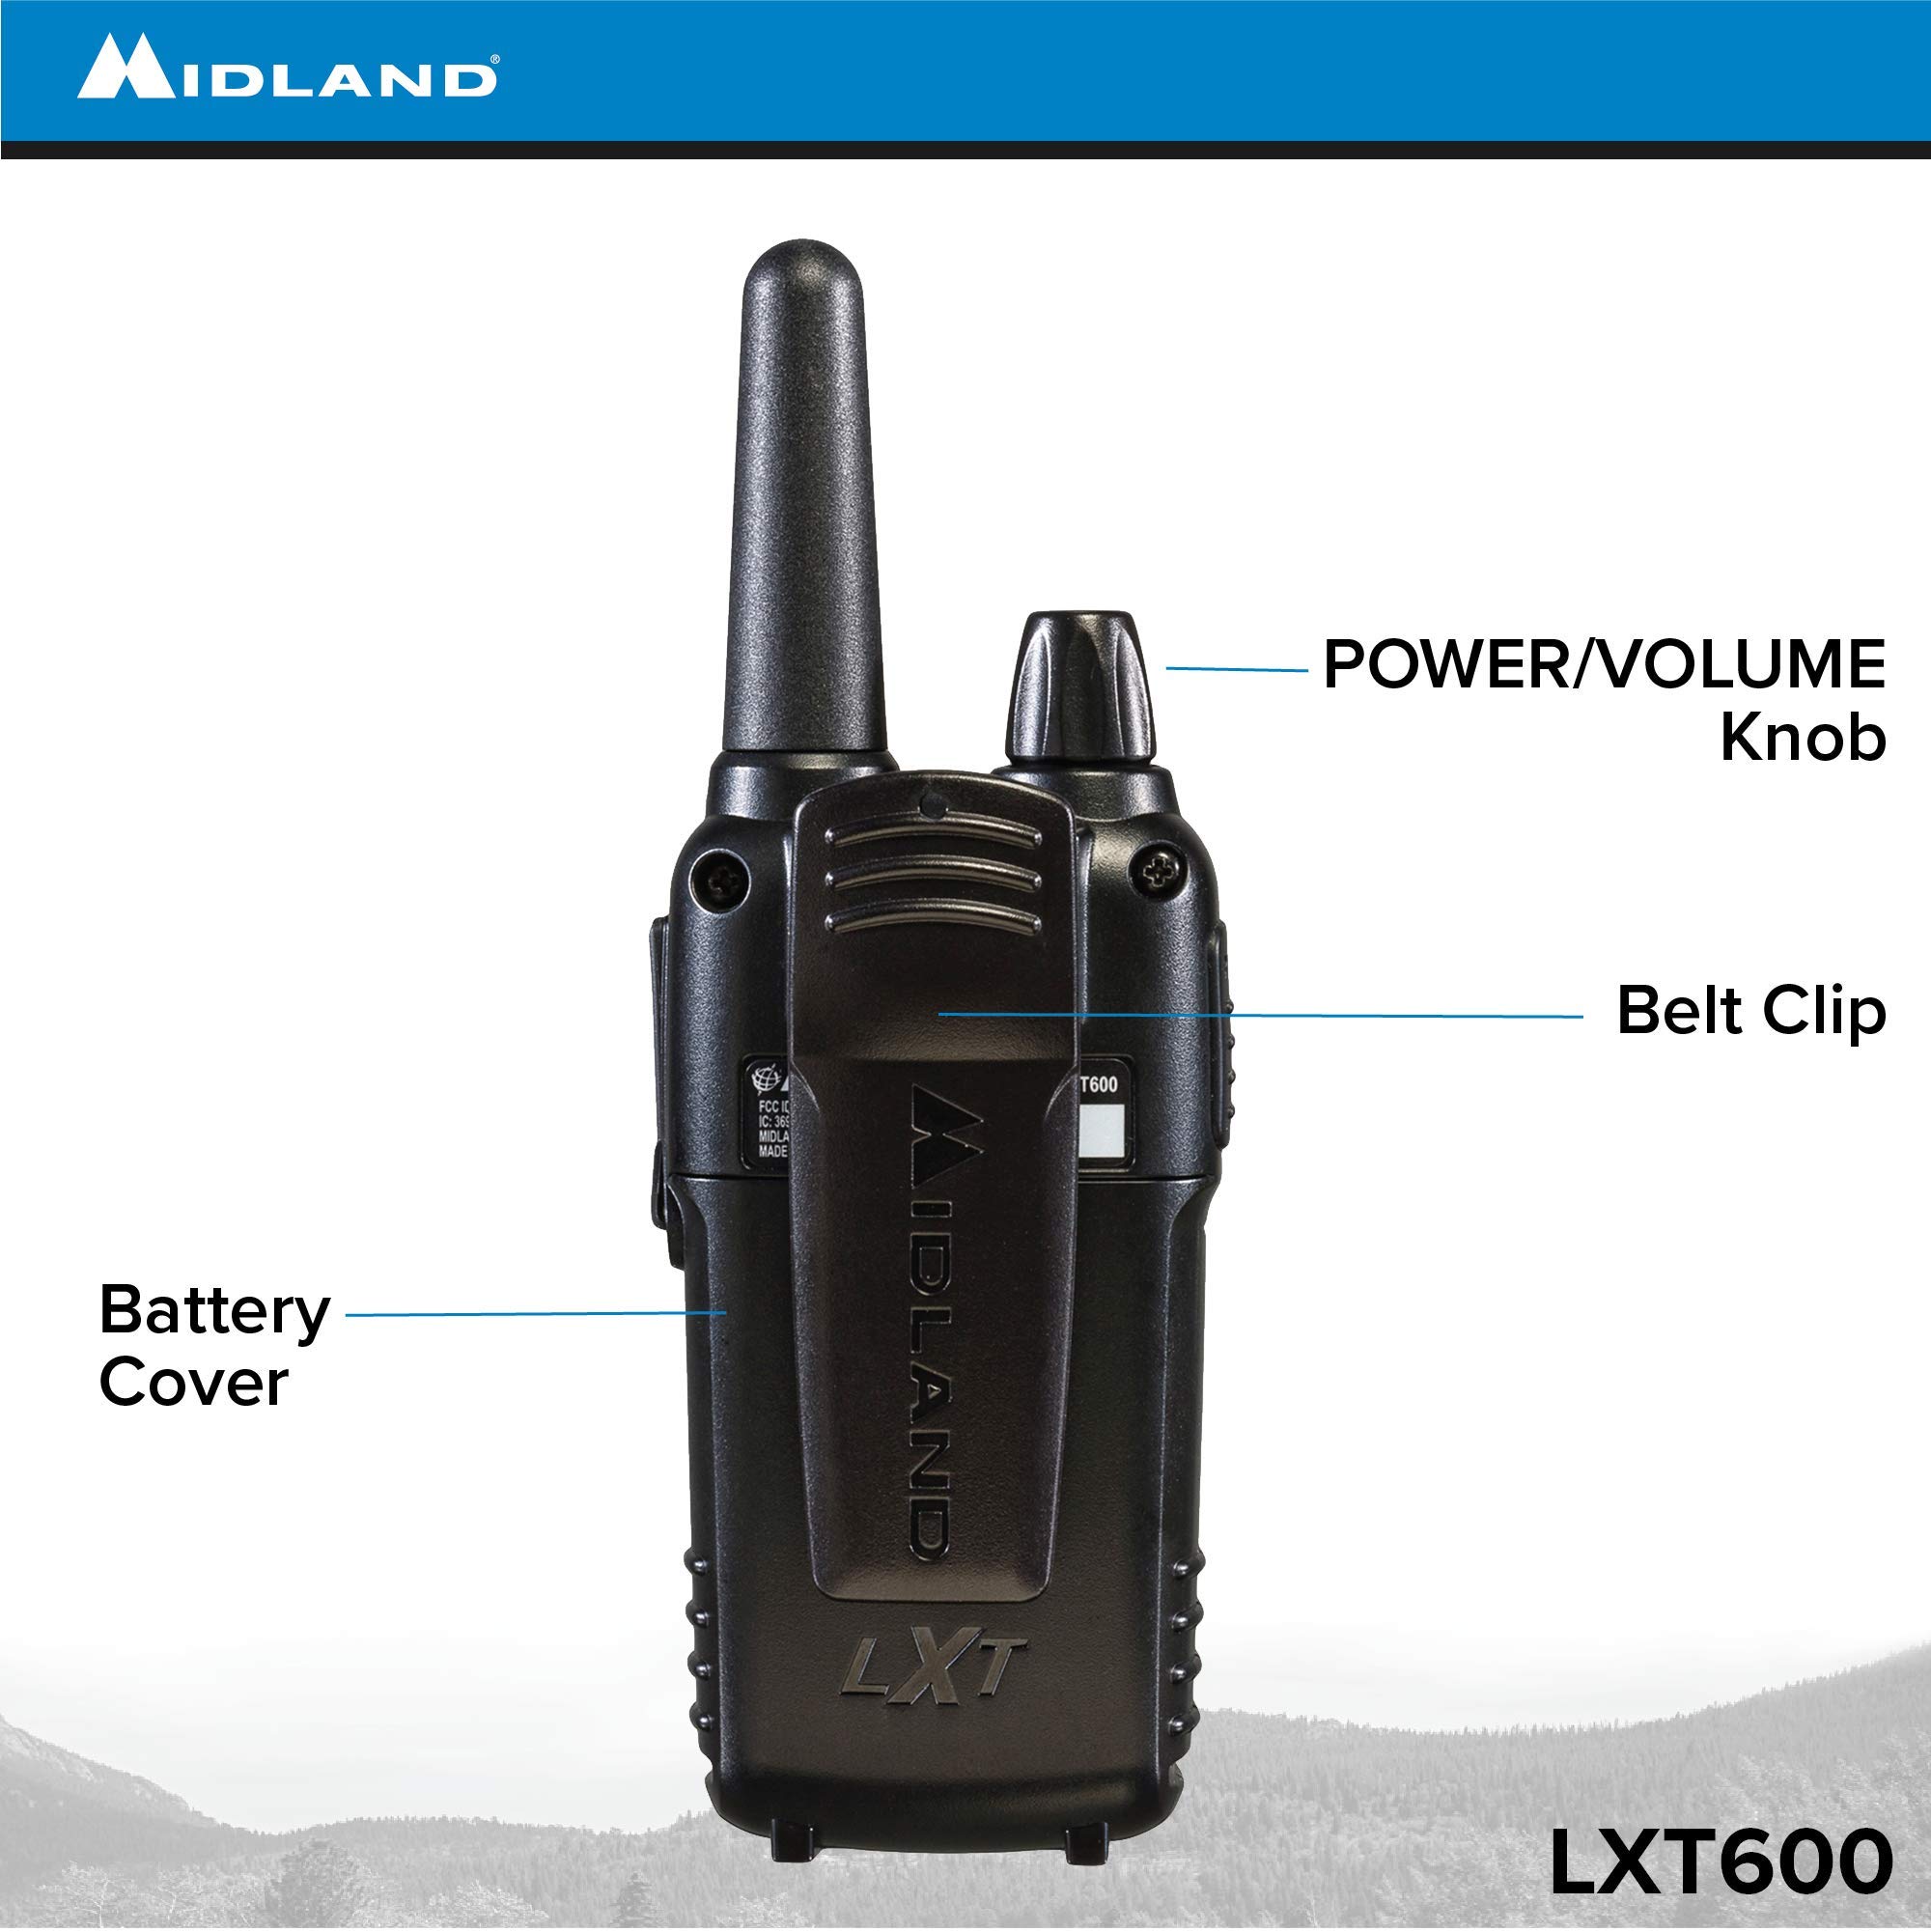 Midland LXT600VP3 36 Channel FRS Two-Way Radio - Up to 30 Mile Range Walkie Talkie - Black (Pack of 10)